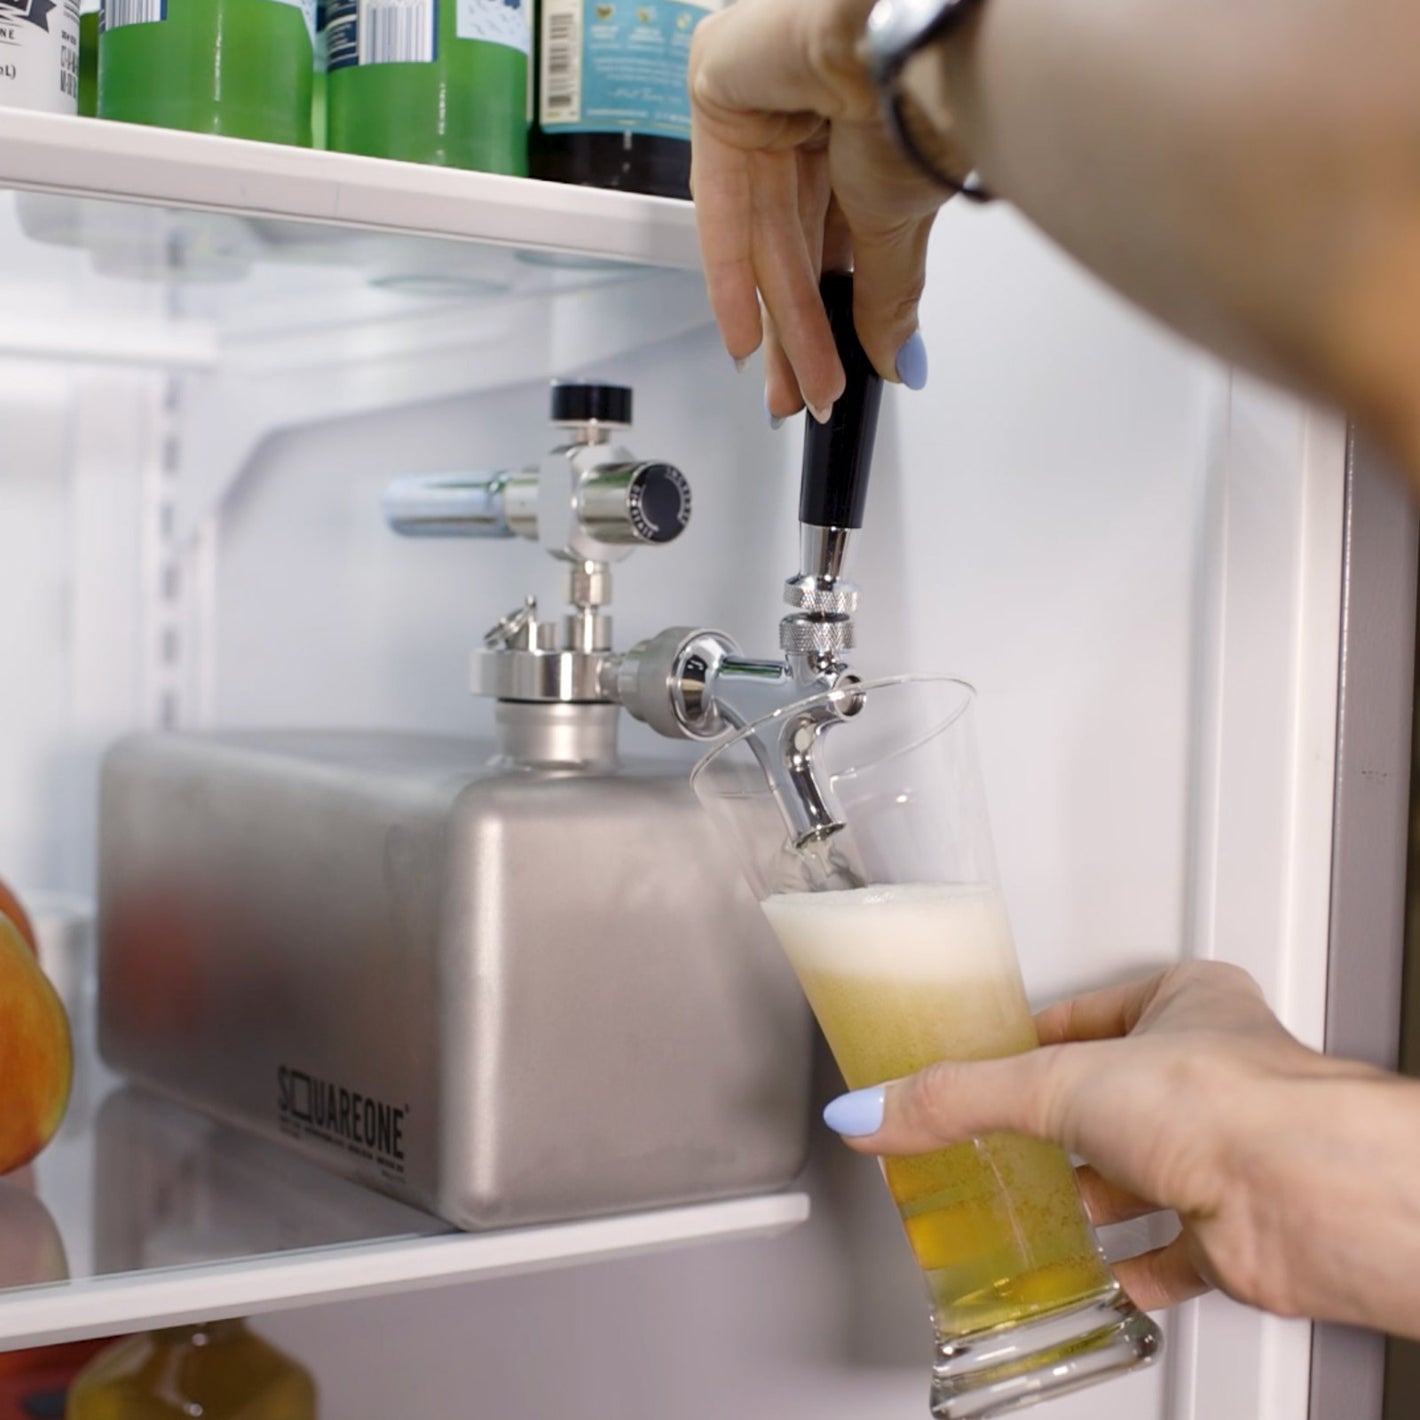 squareone mini keg in home refrigerator